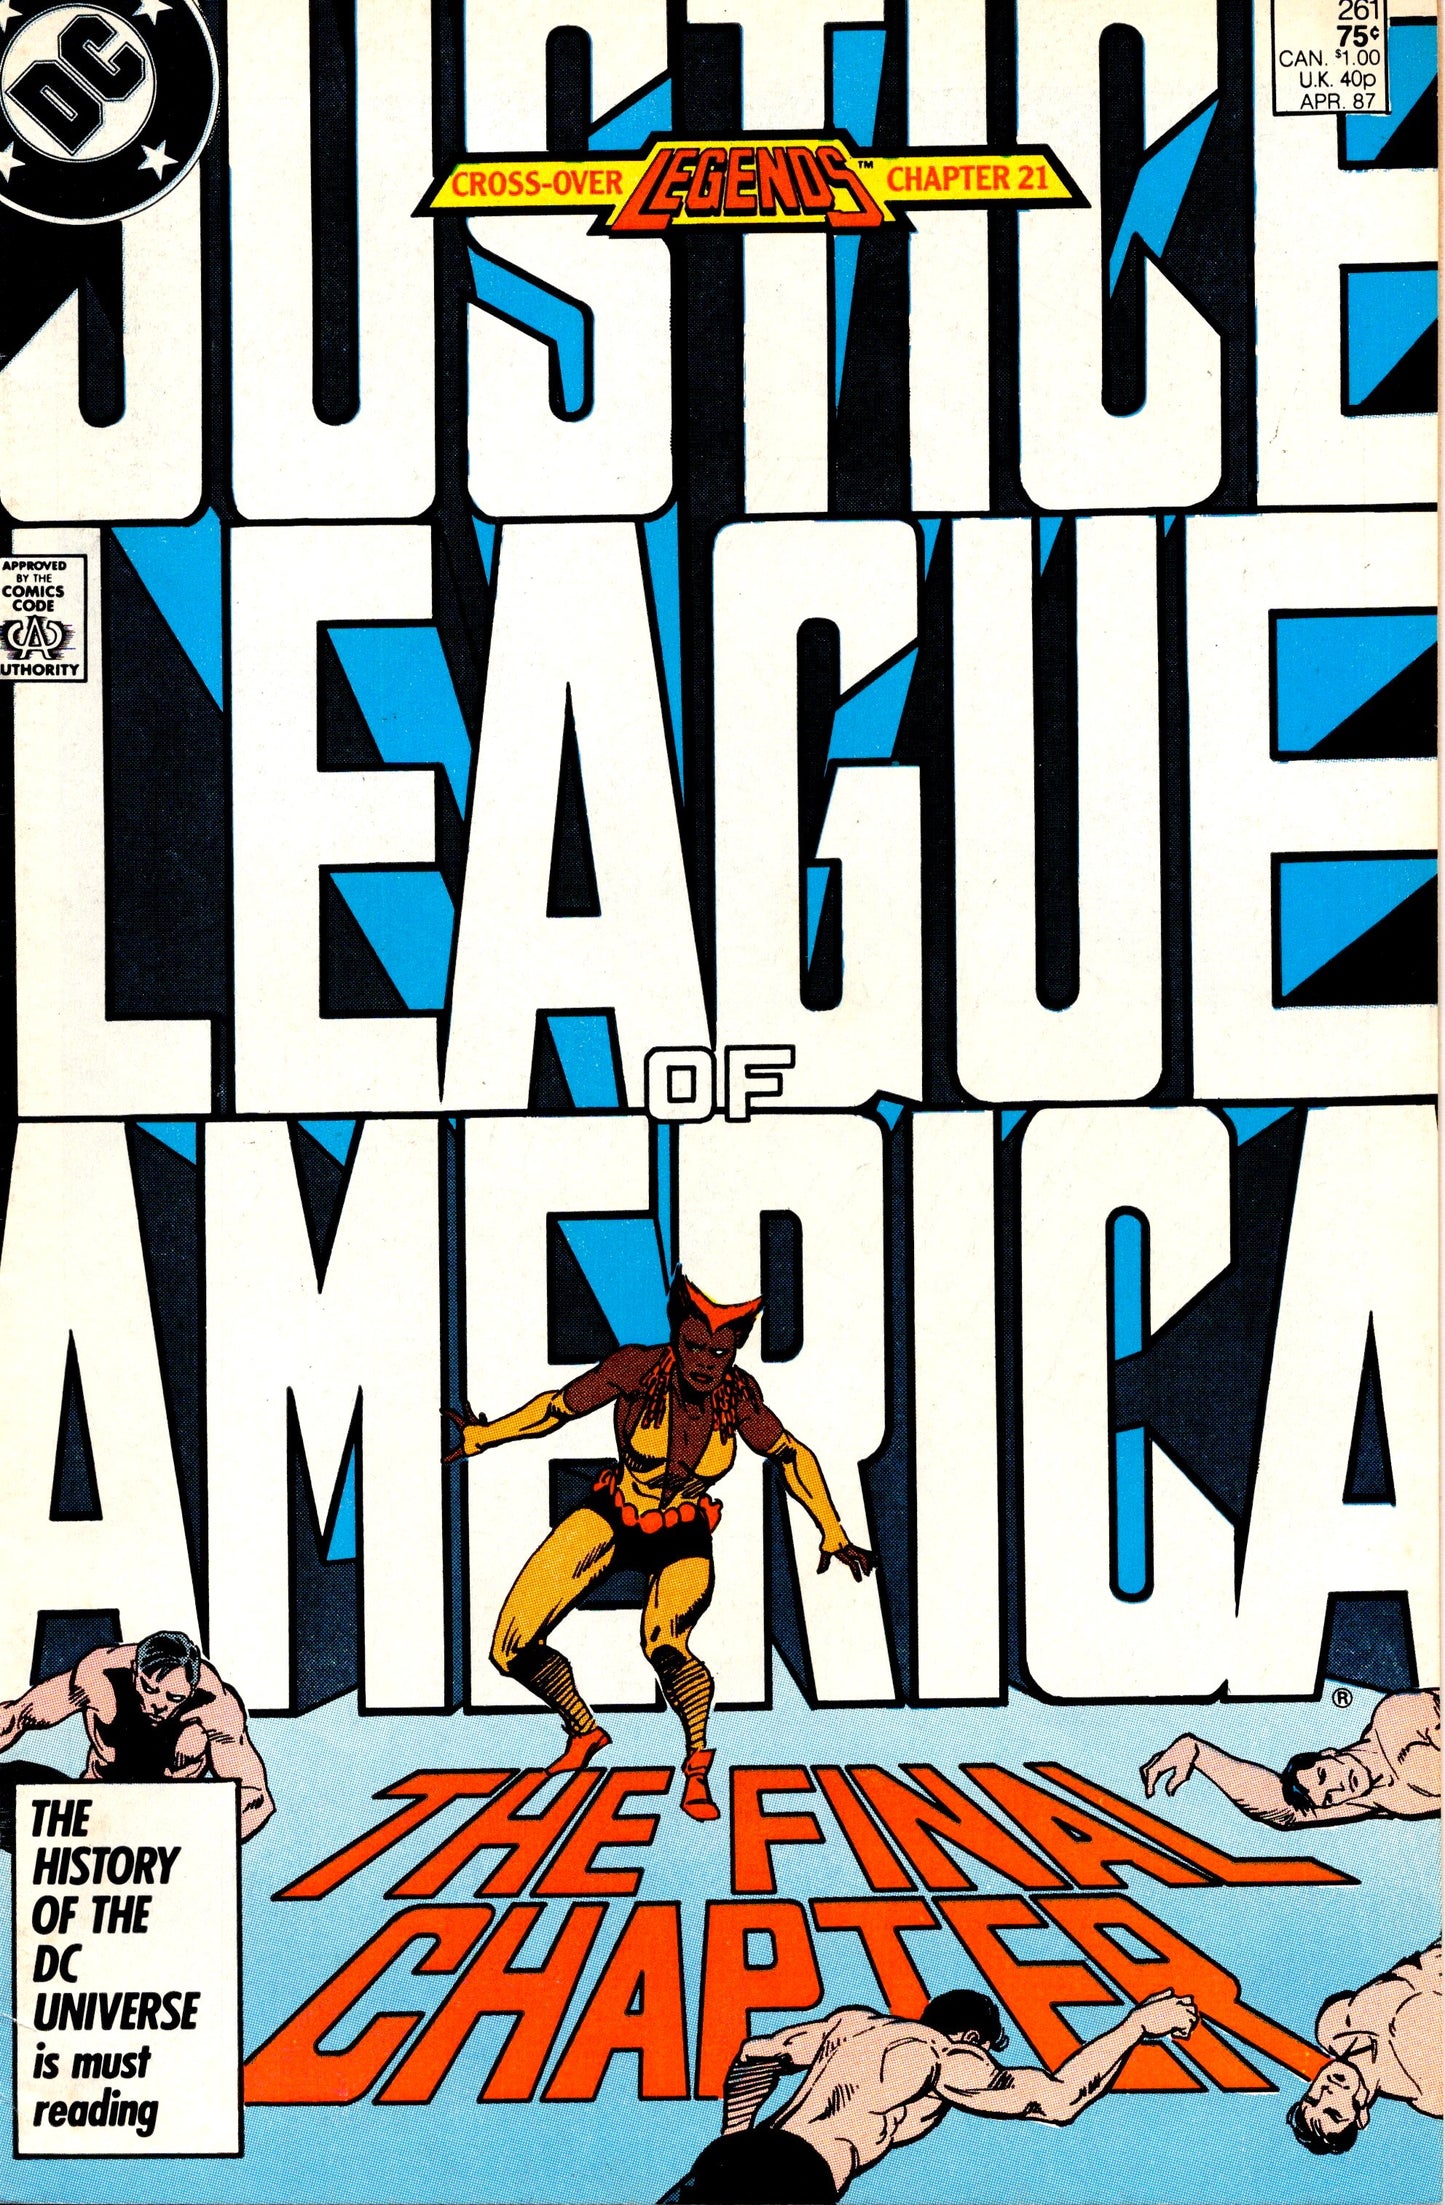 Justice League of America #261 (1960)